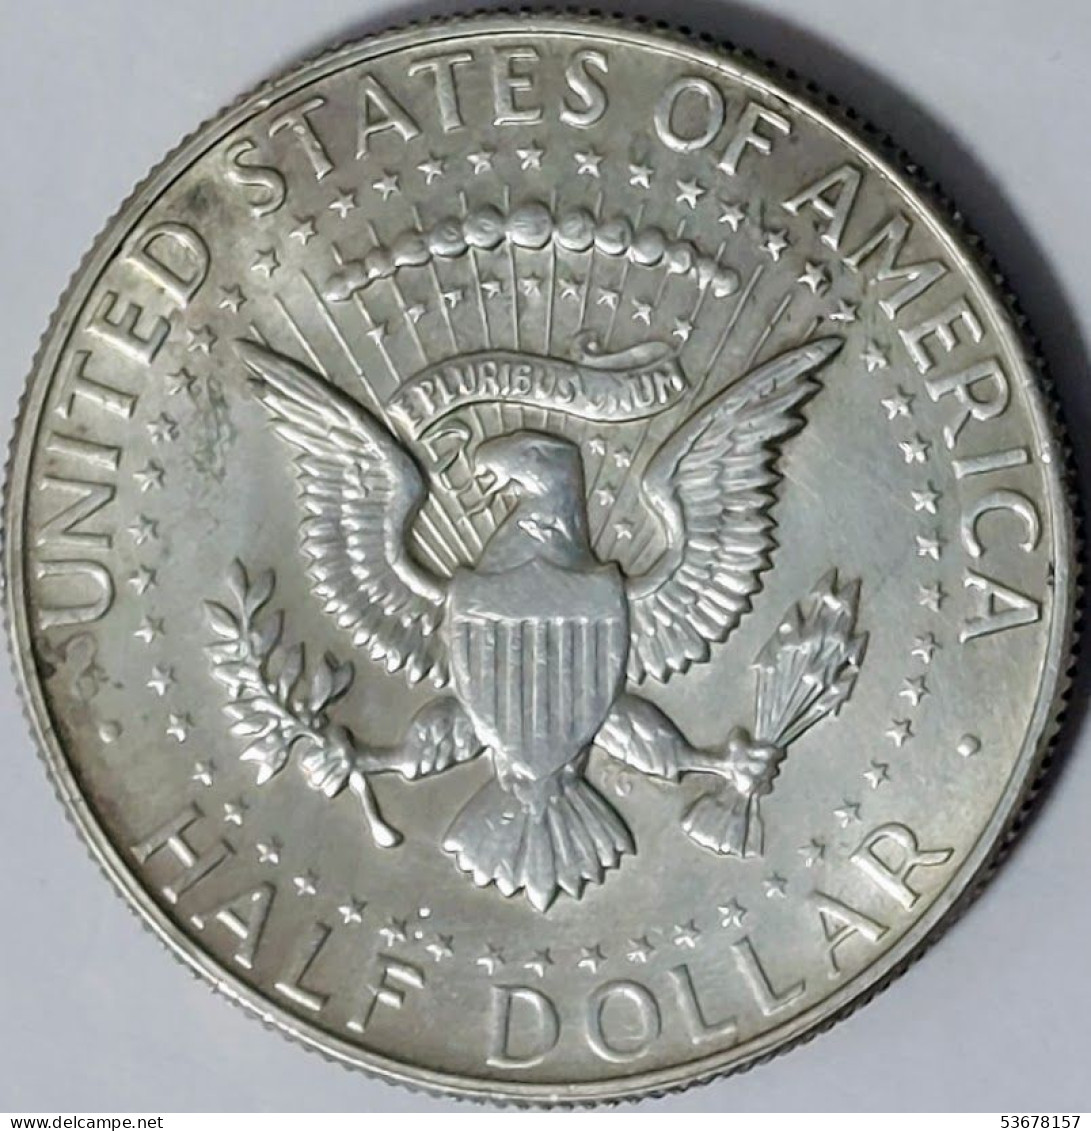 USA - ½ Dollar 1966, KM# 202a, Silver (#2183) - 1964-…: Kennedy